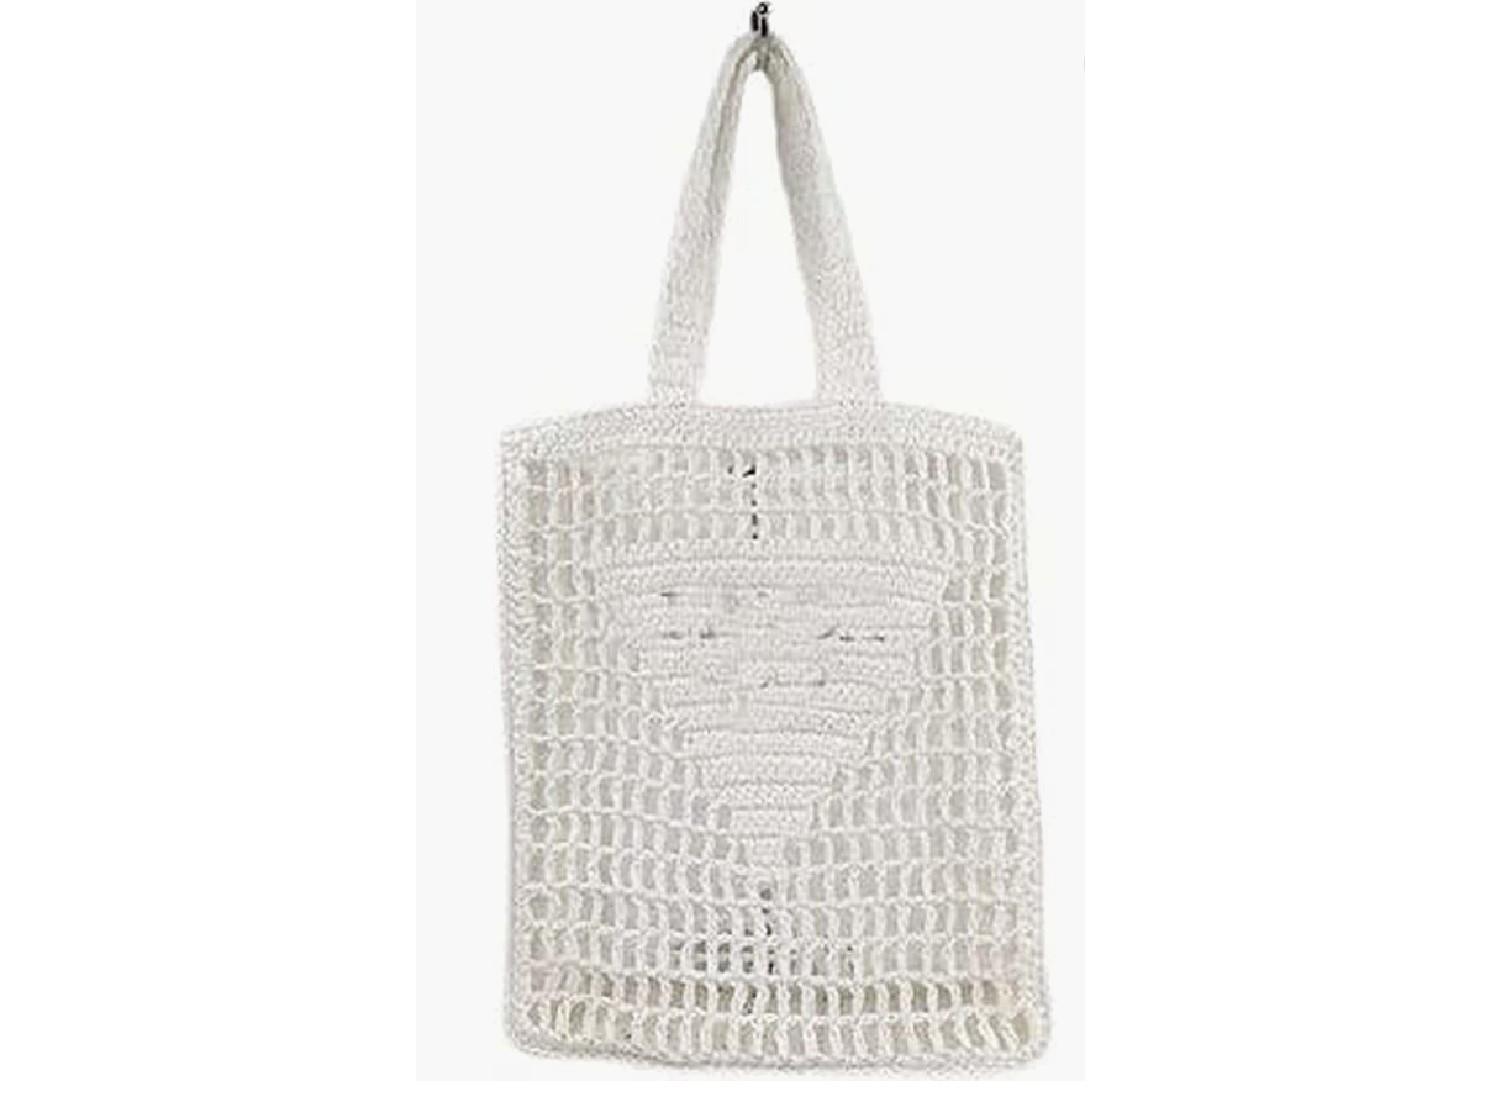 A white straw bag.